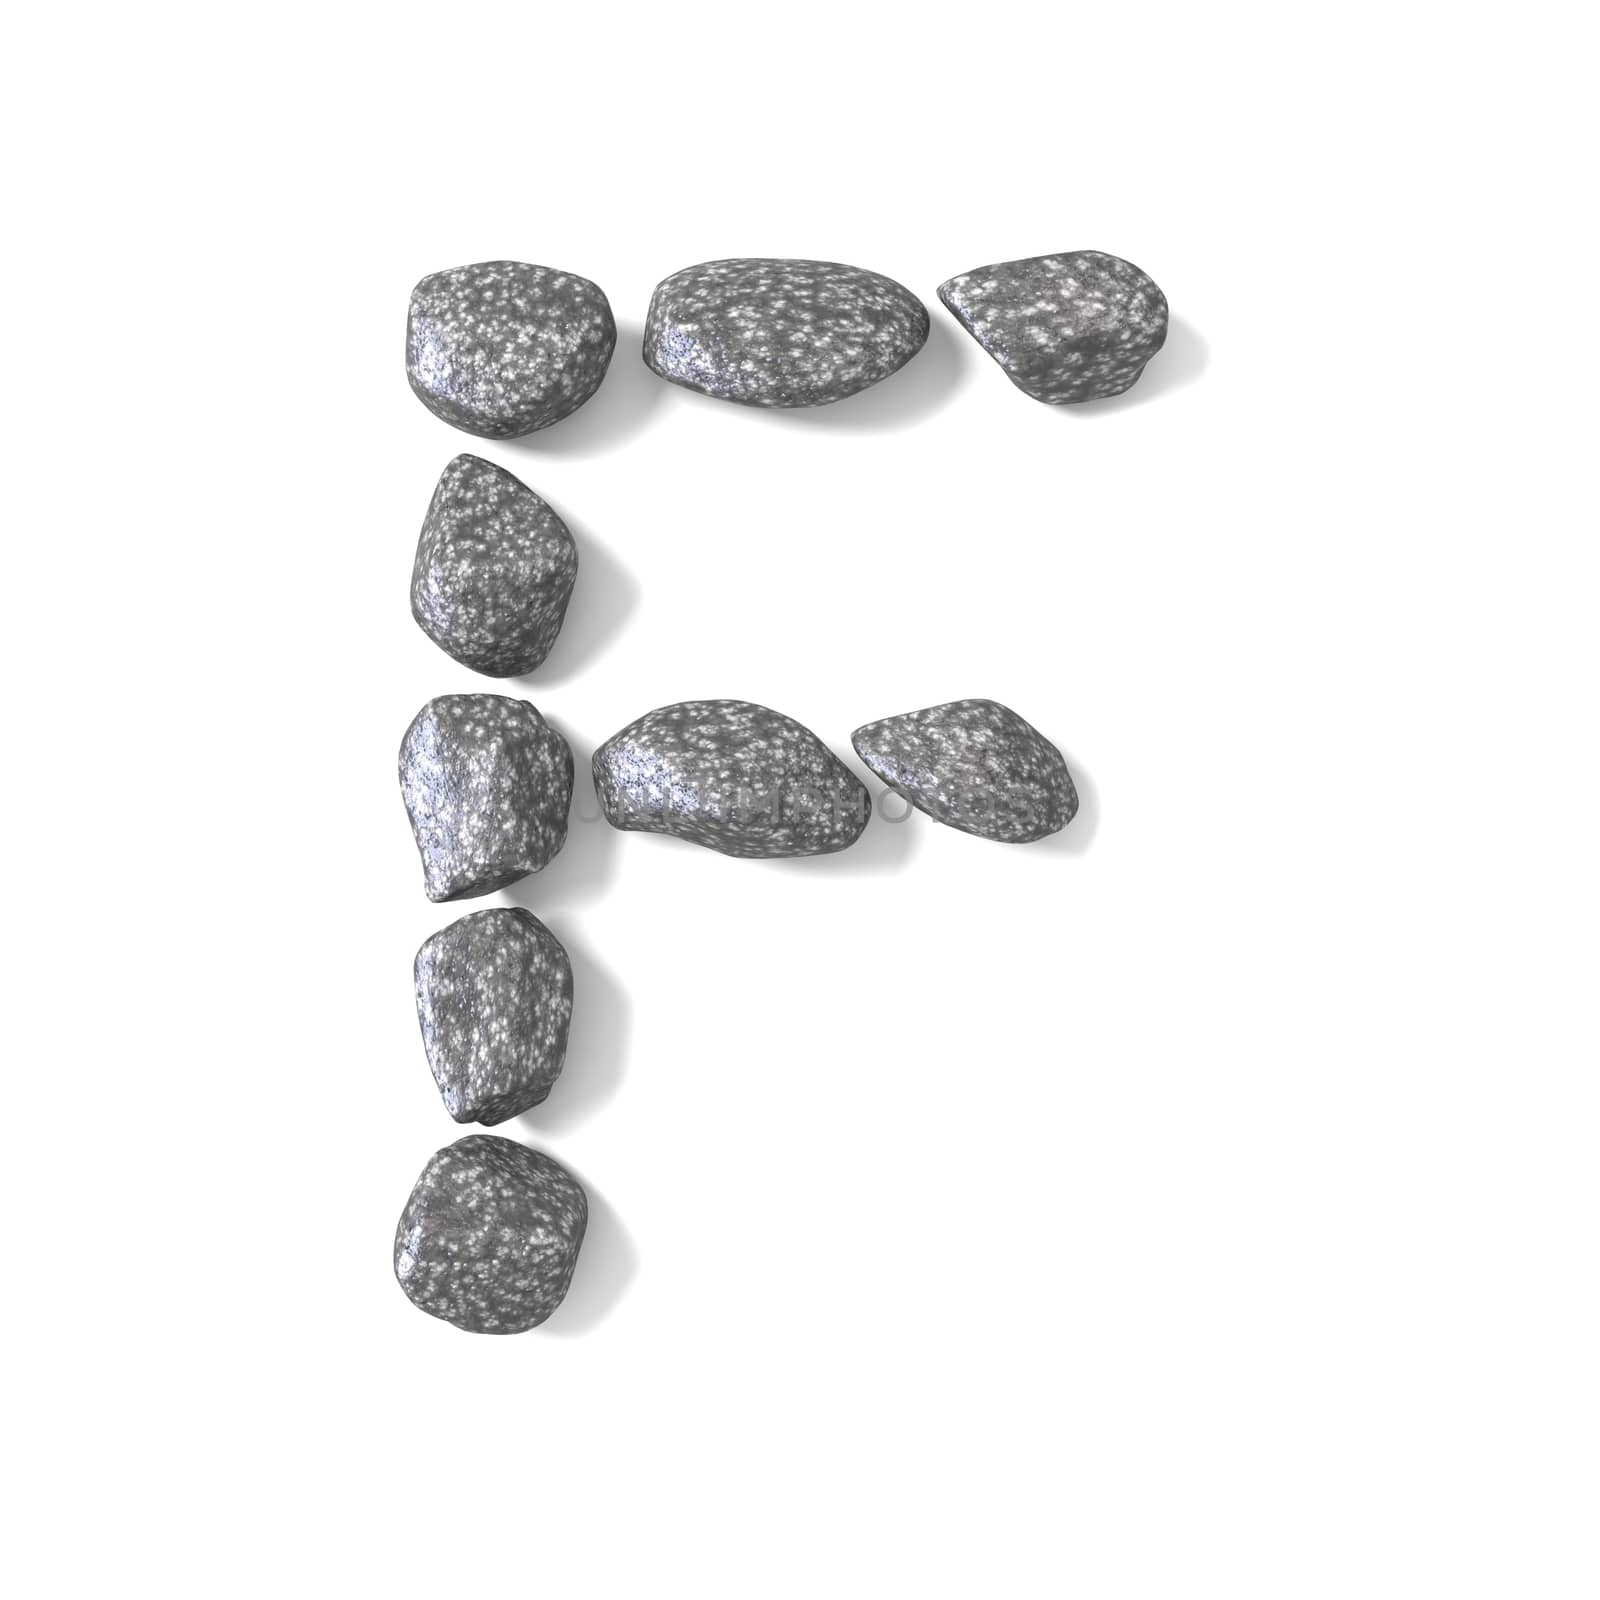 Font made of rocks LETTER F 3D render illustration isolated on white background